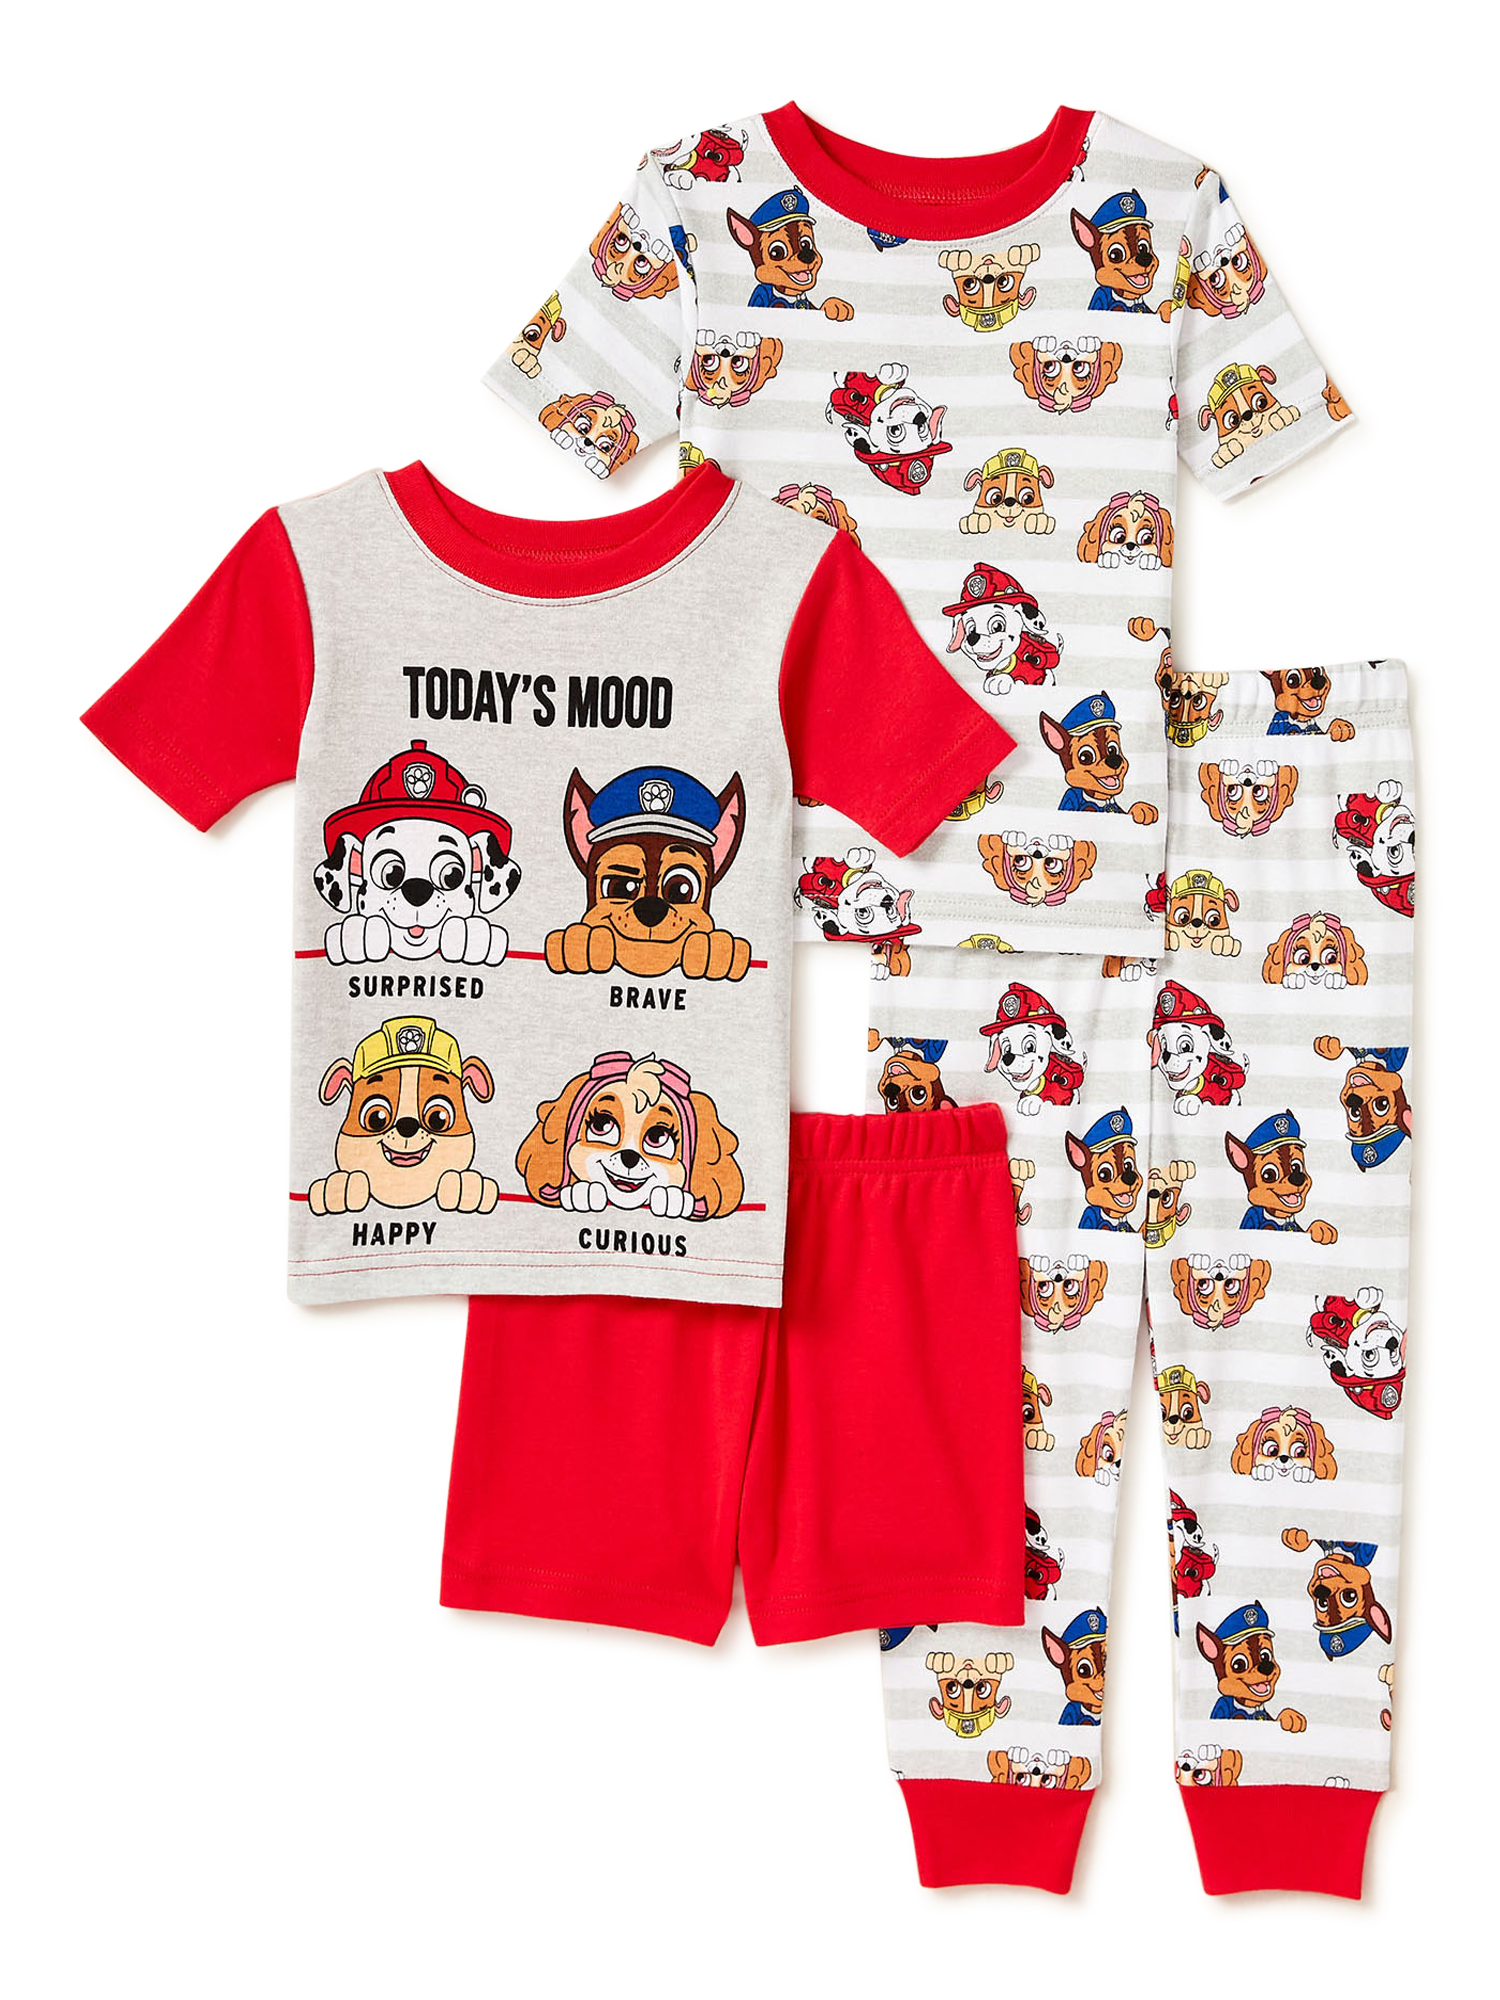 Paw Patrol Toddler Boys Loose Fit Short Sleeve Top & Shorts, 2-Piece Pajamas Set, Sizes 2T-5T - image 1 of 3